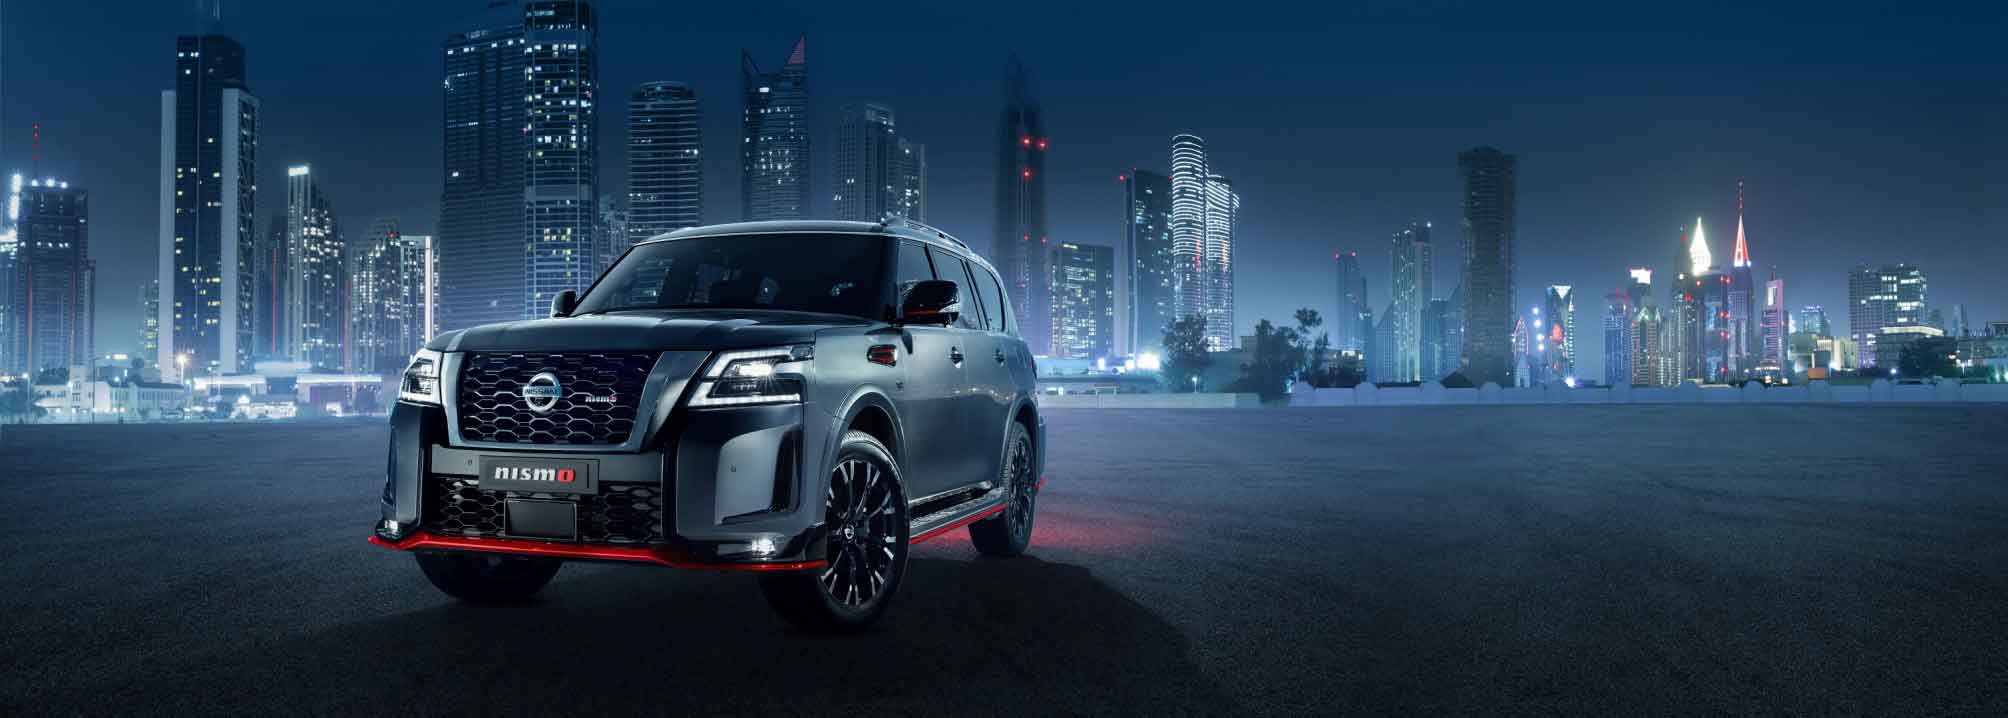 Nissan Patrol Nismo makes global debut video-banner